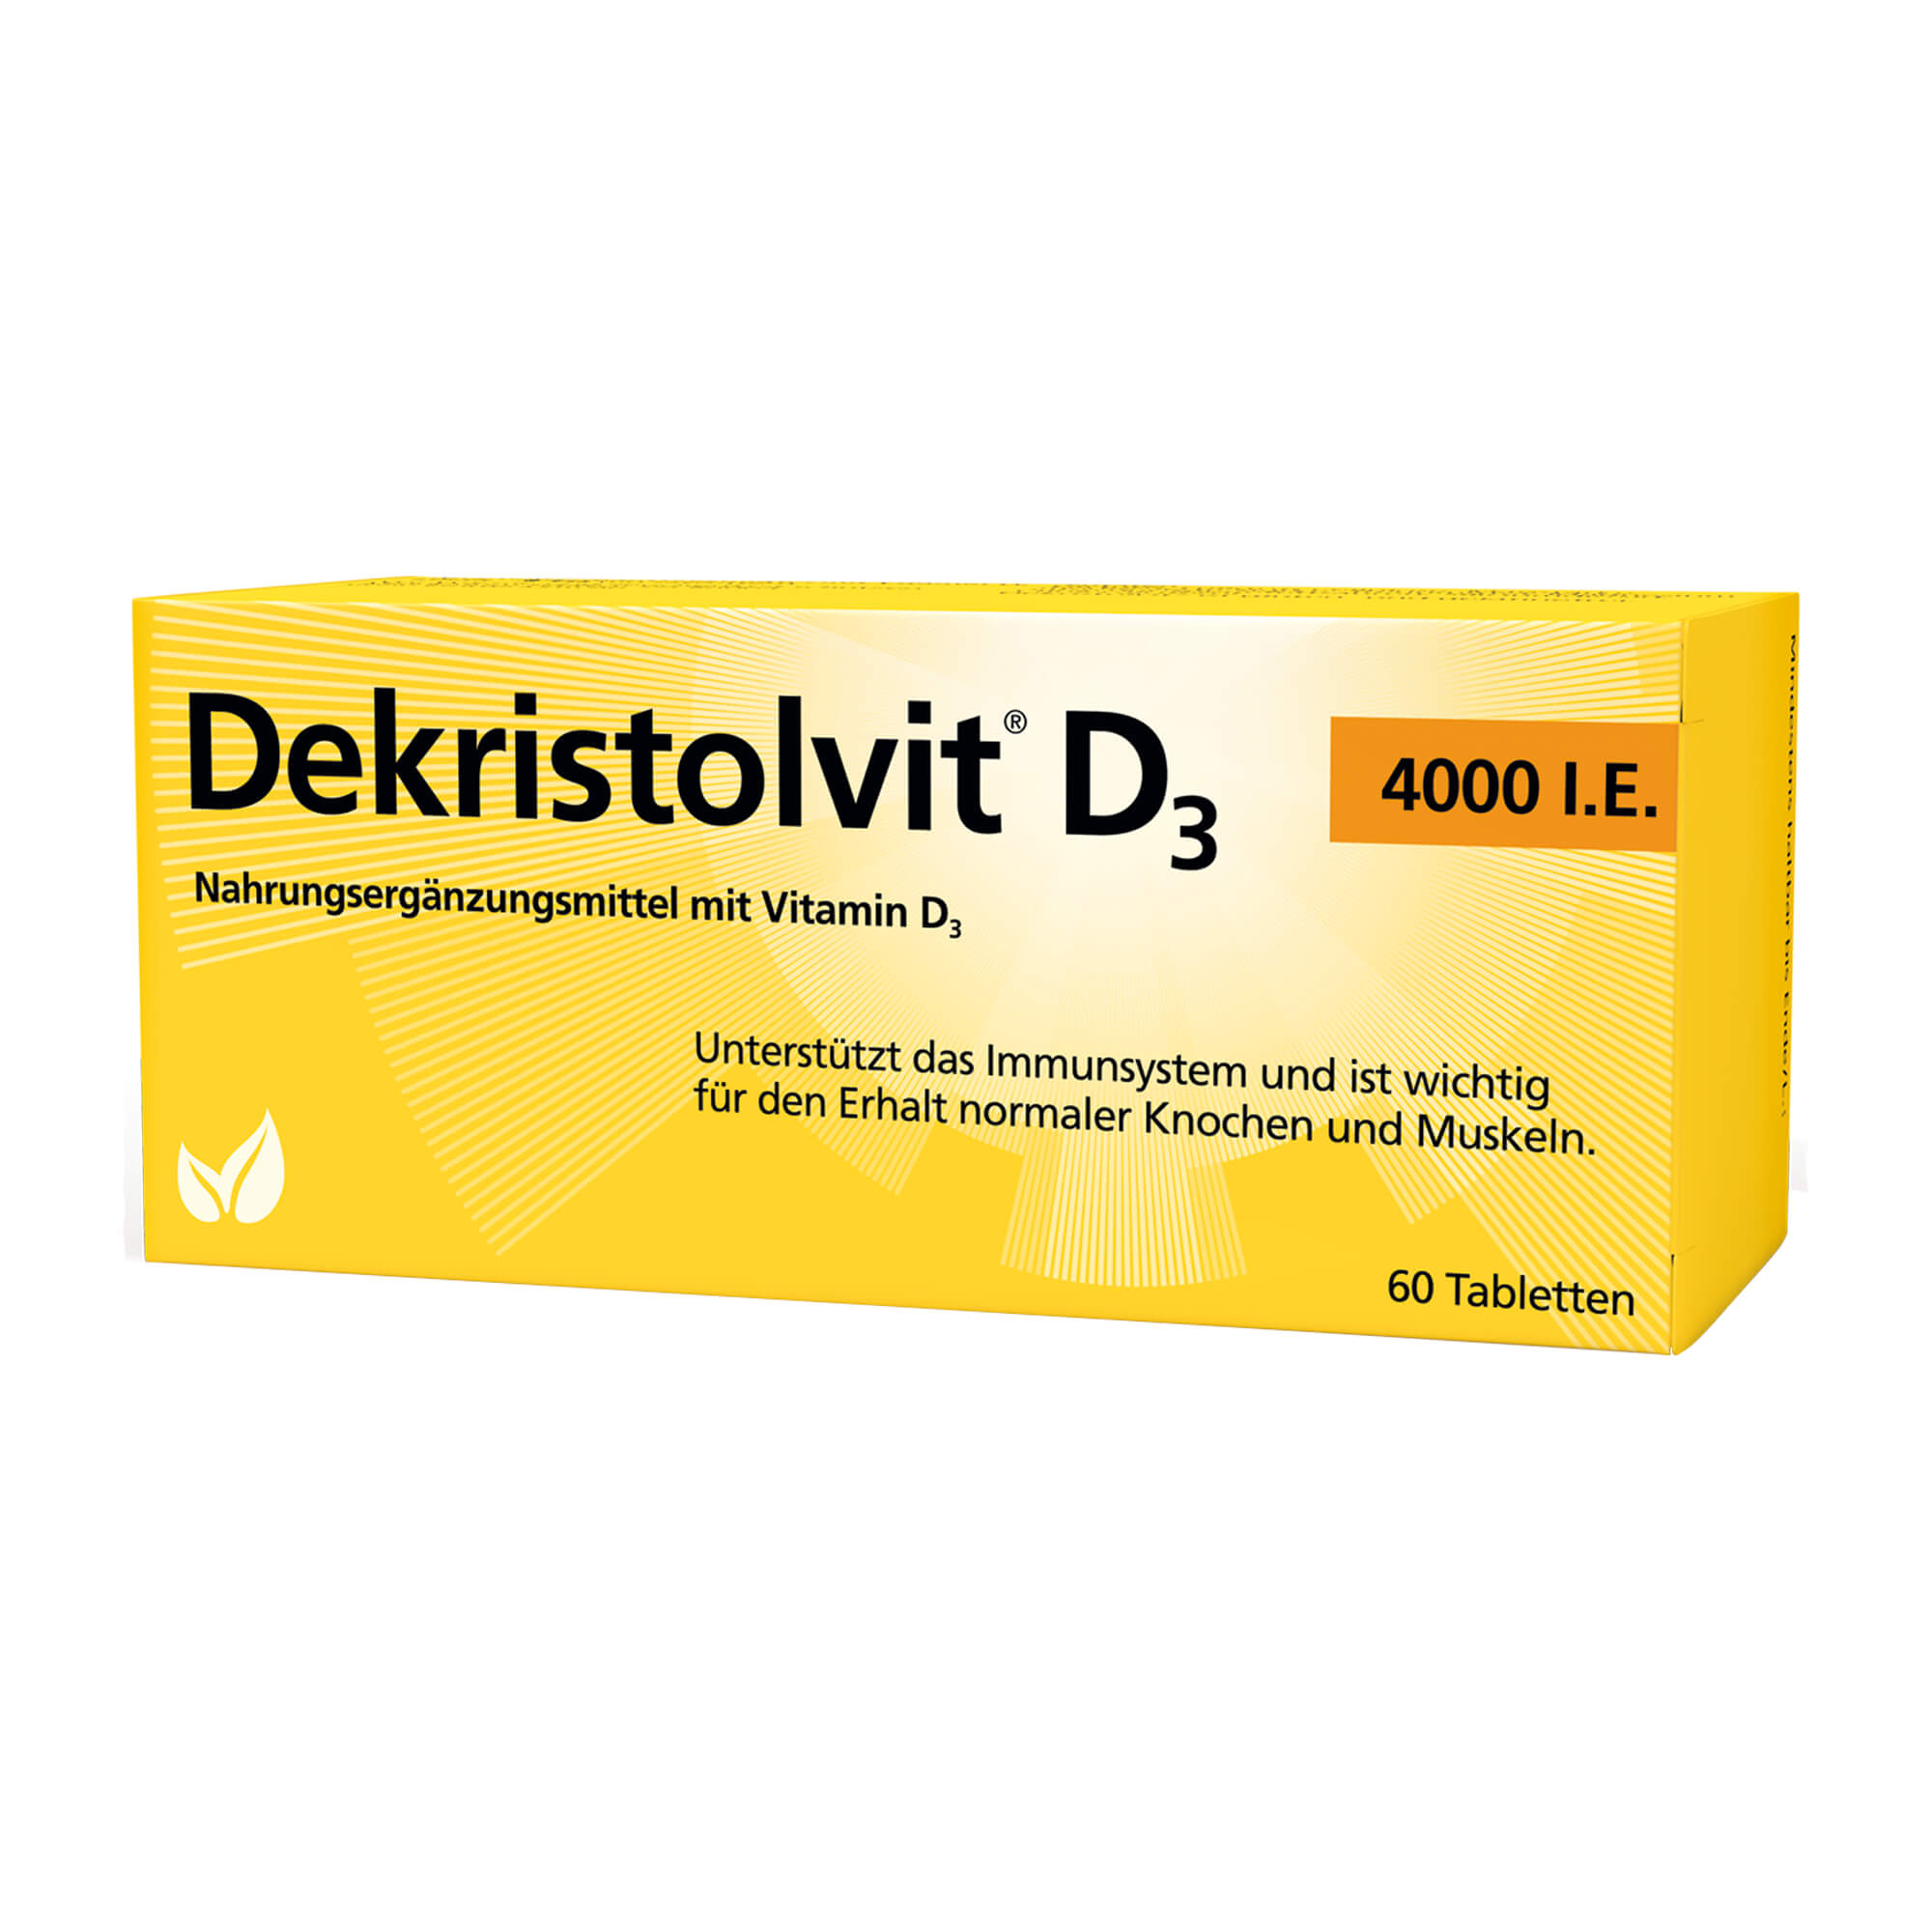 Nahrungsergänzungsmittel mit Vitamin D3 (4000 I.E.).